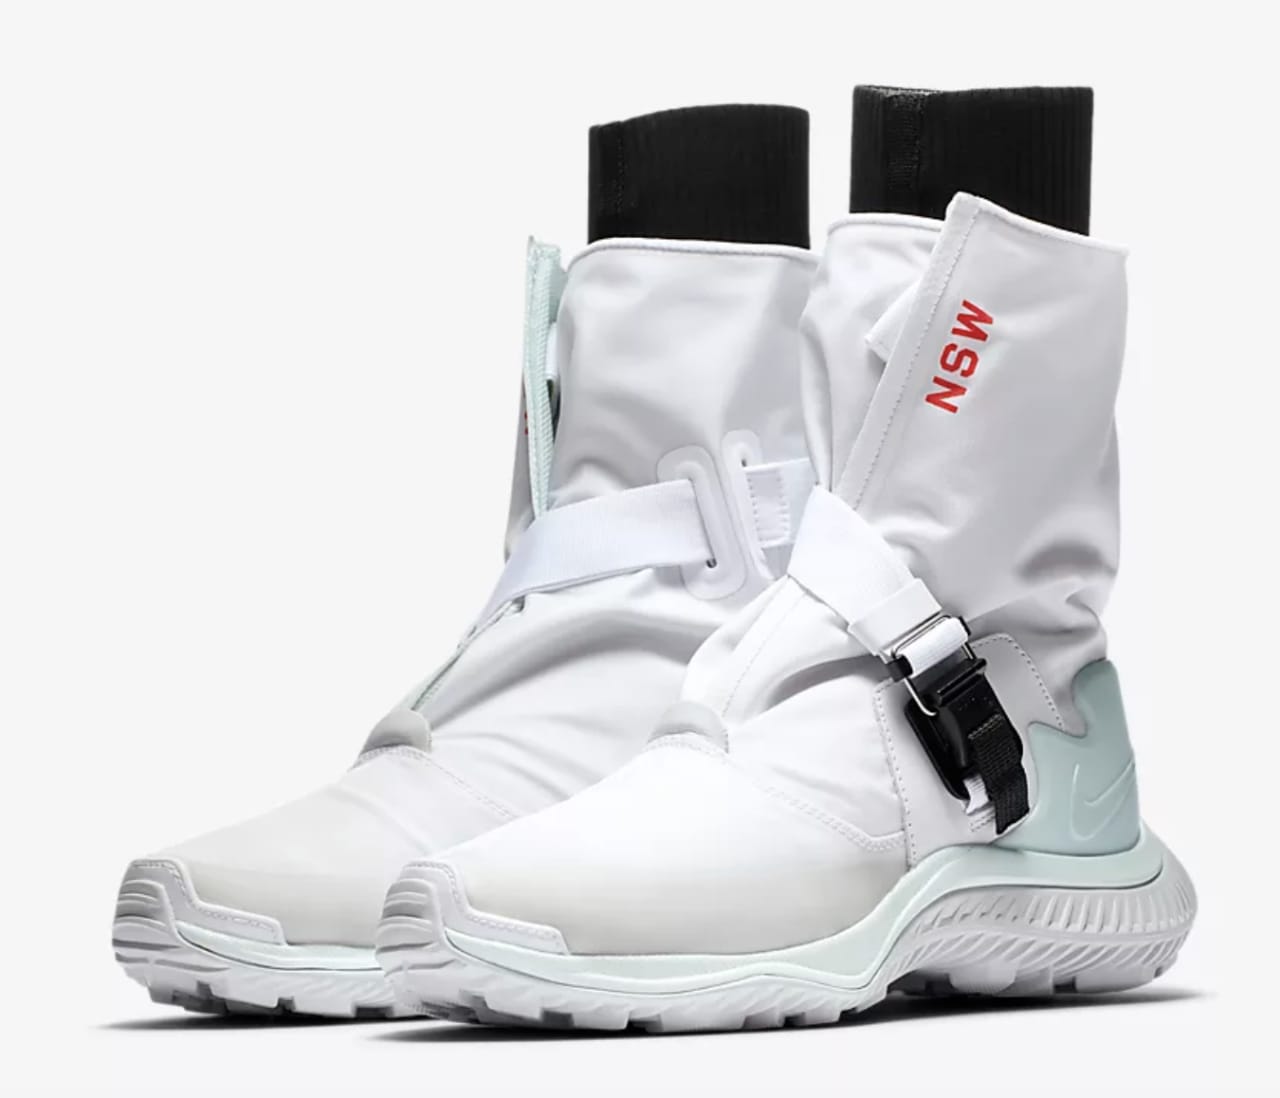 Nike Gaiter Women's Boot White/Black 